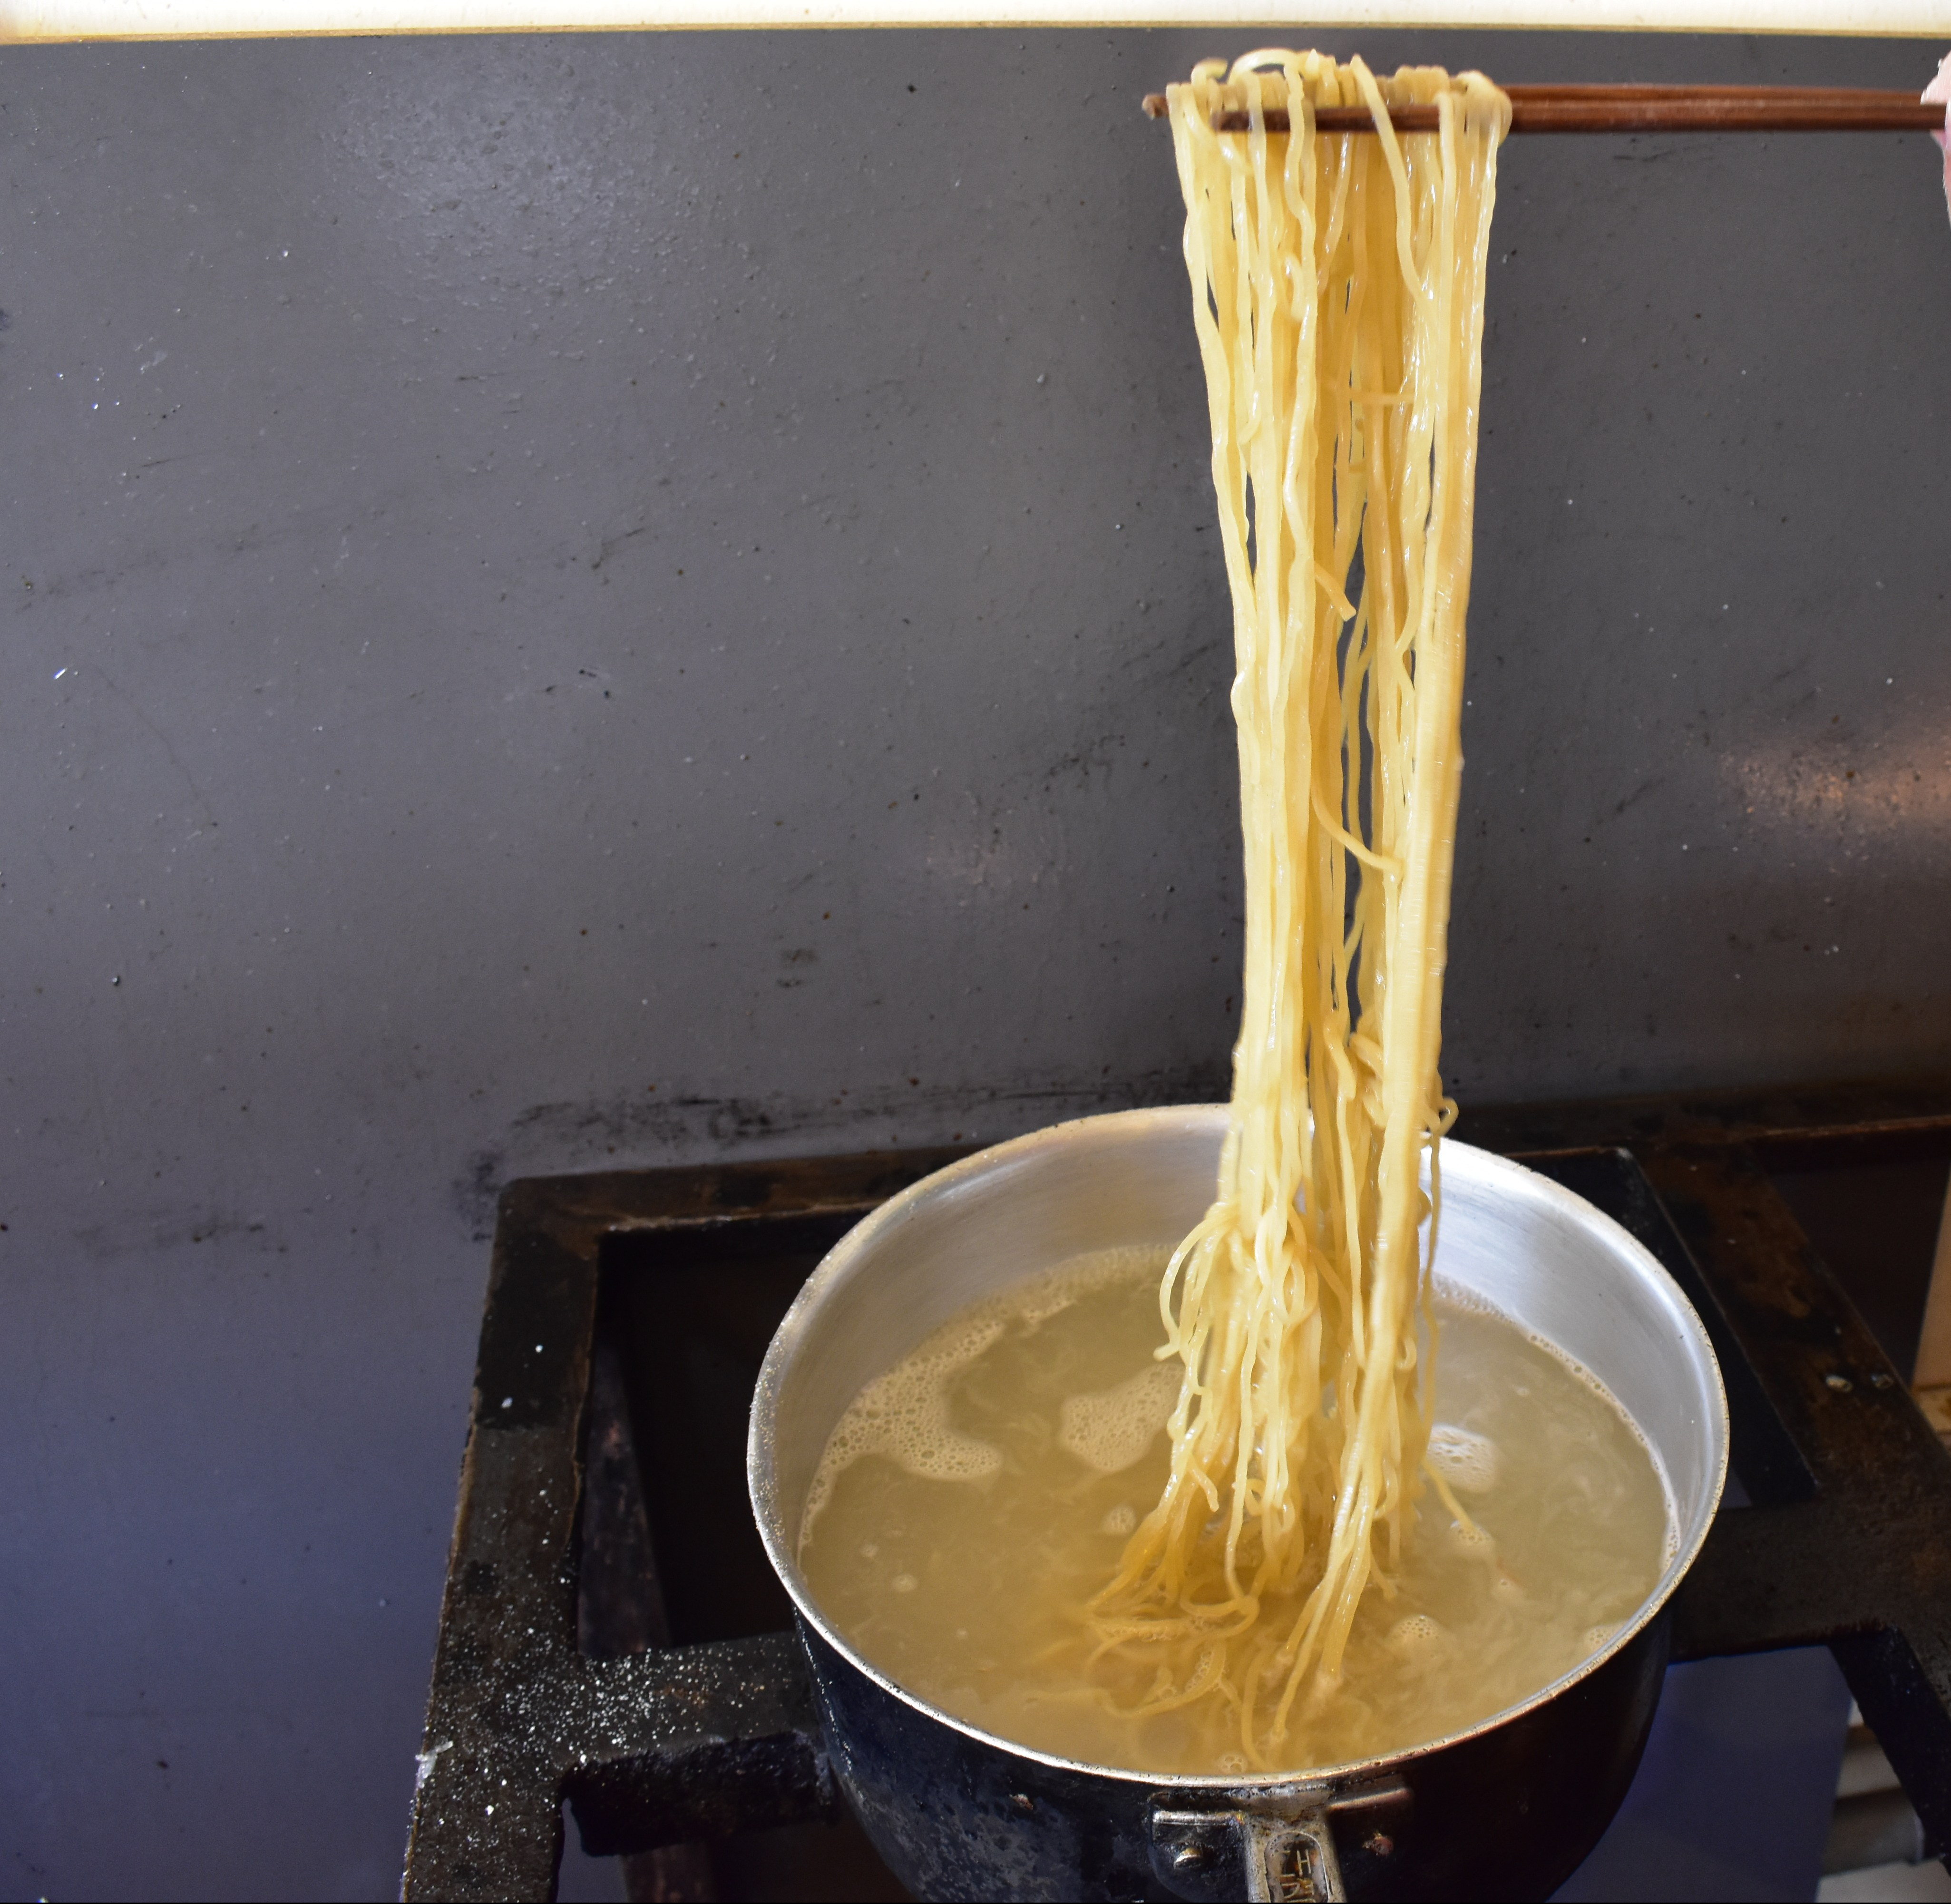 cooking noodles